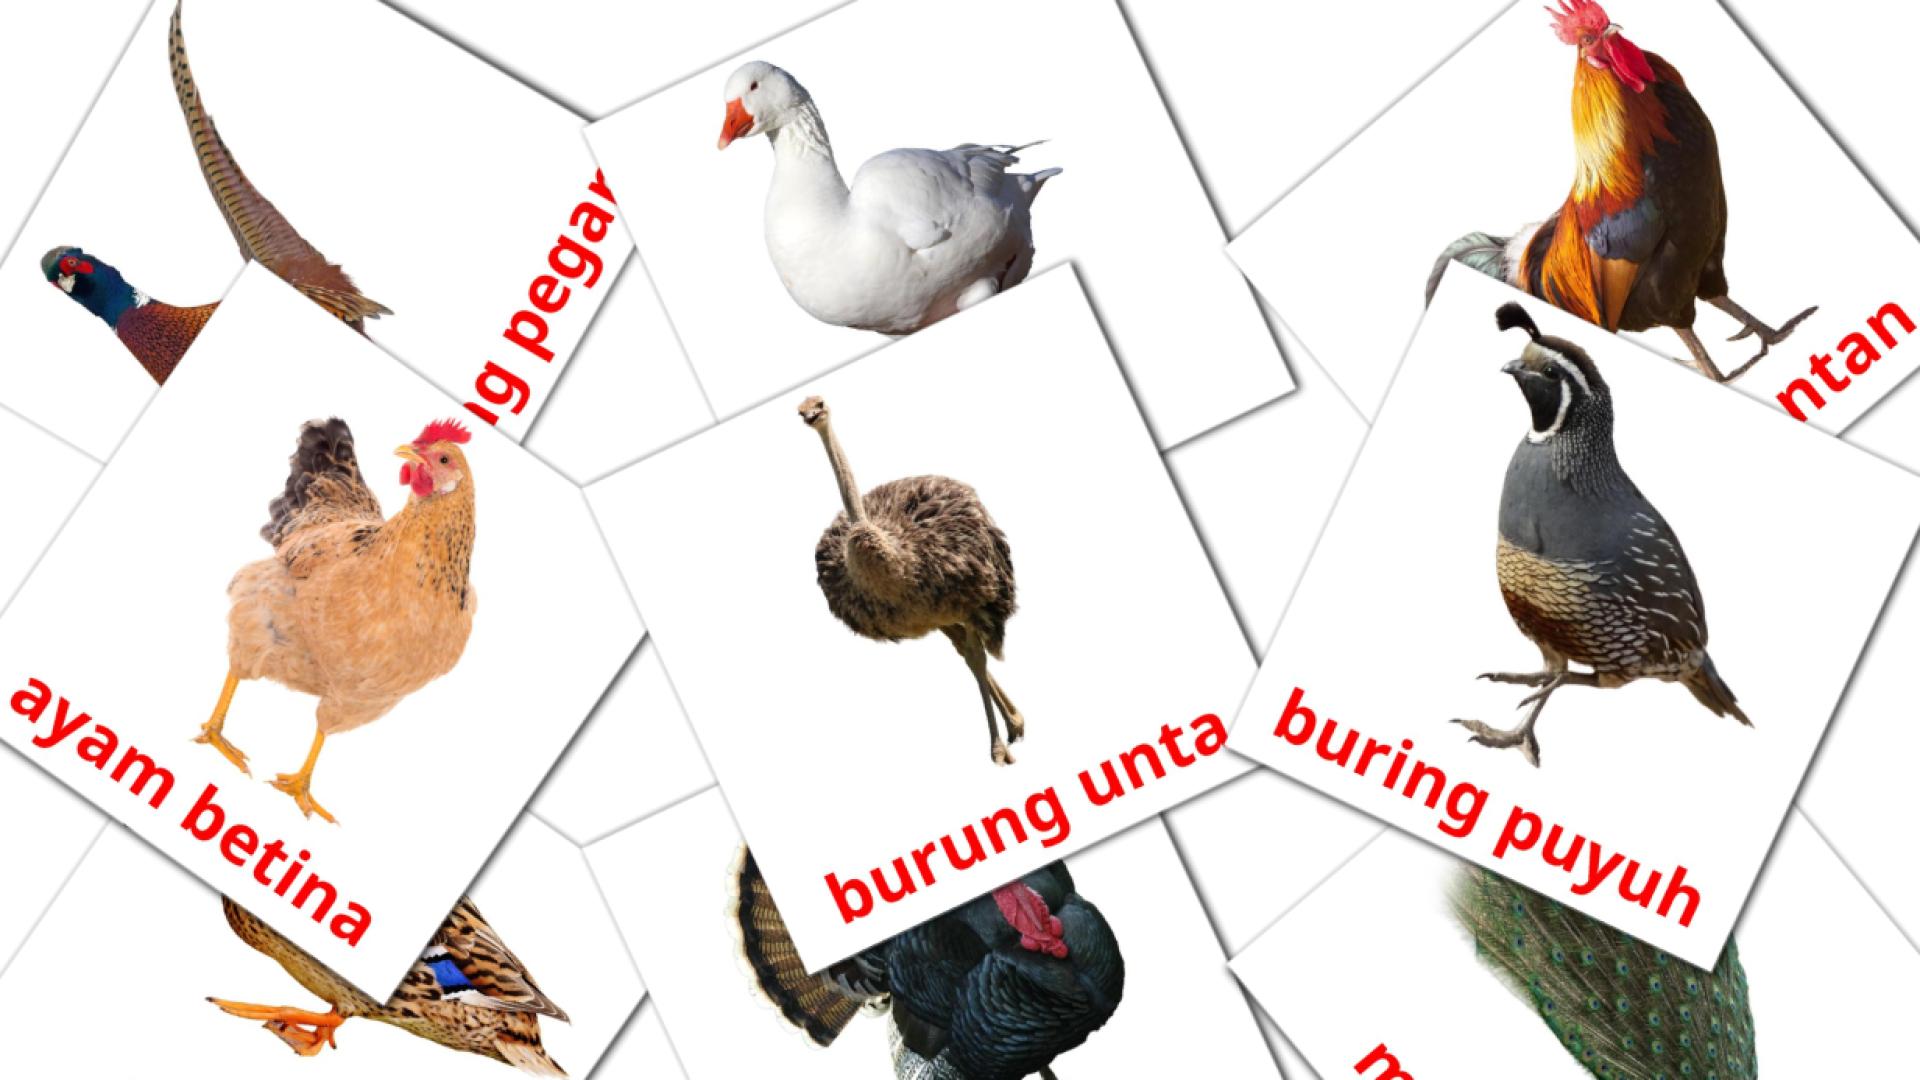 Burung peliharaan flashcards